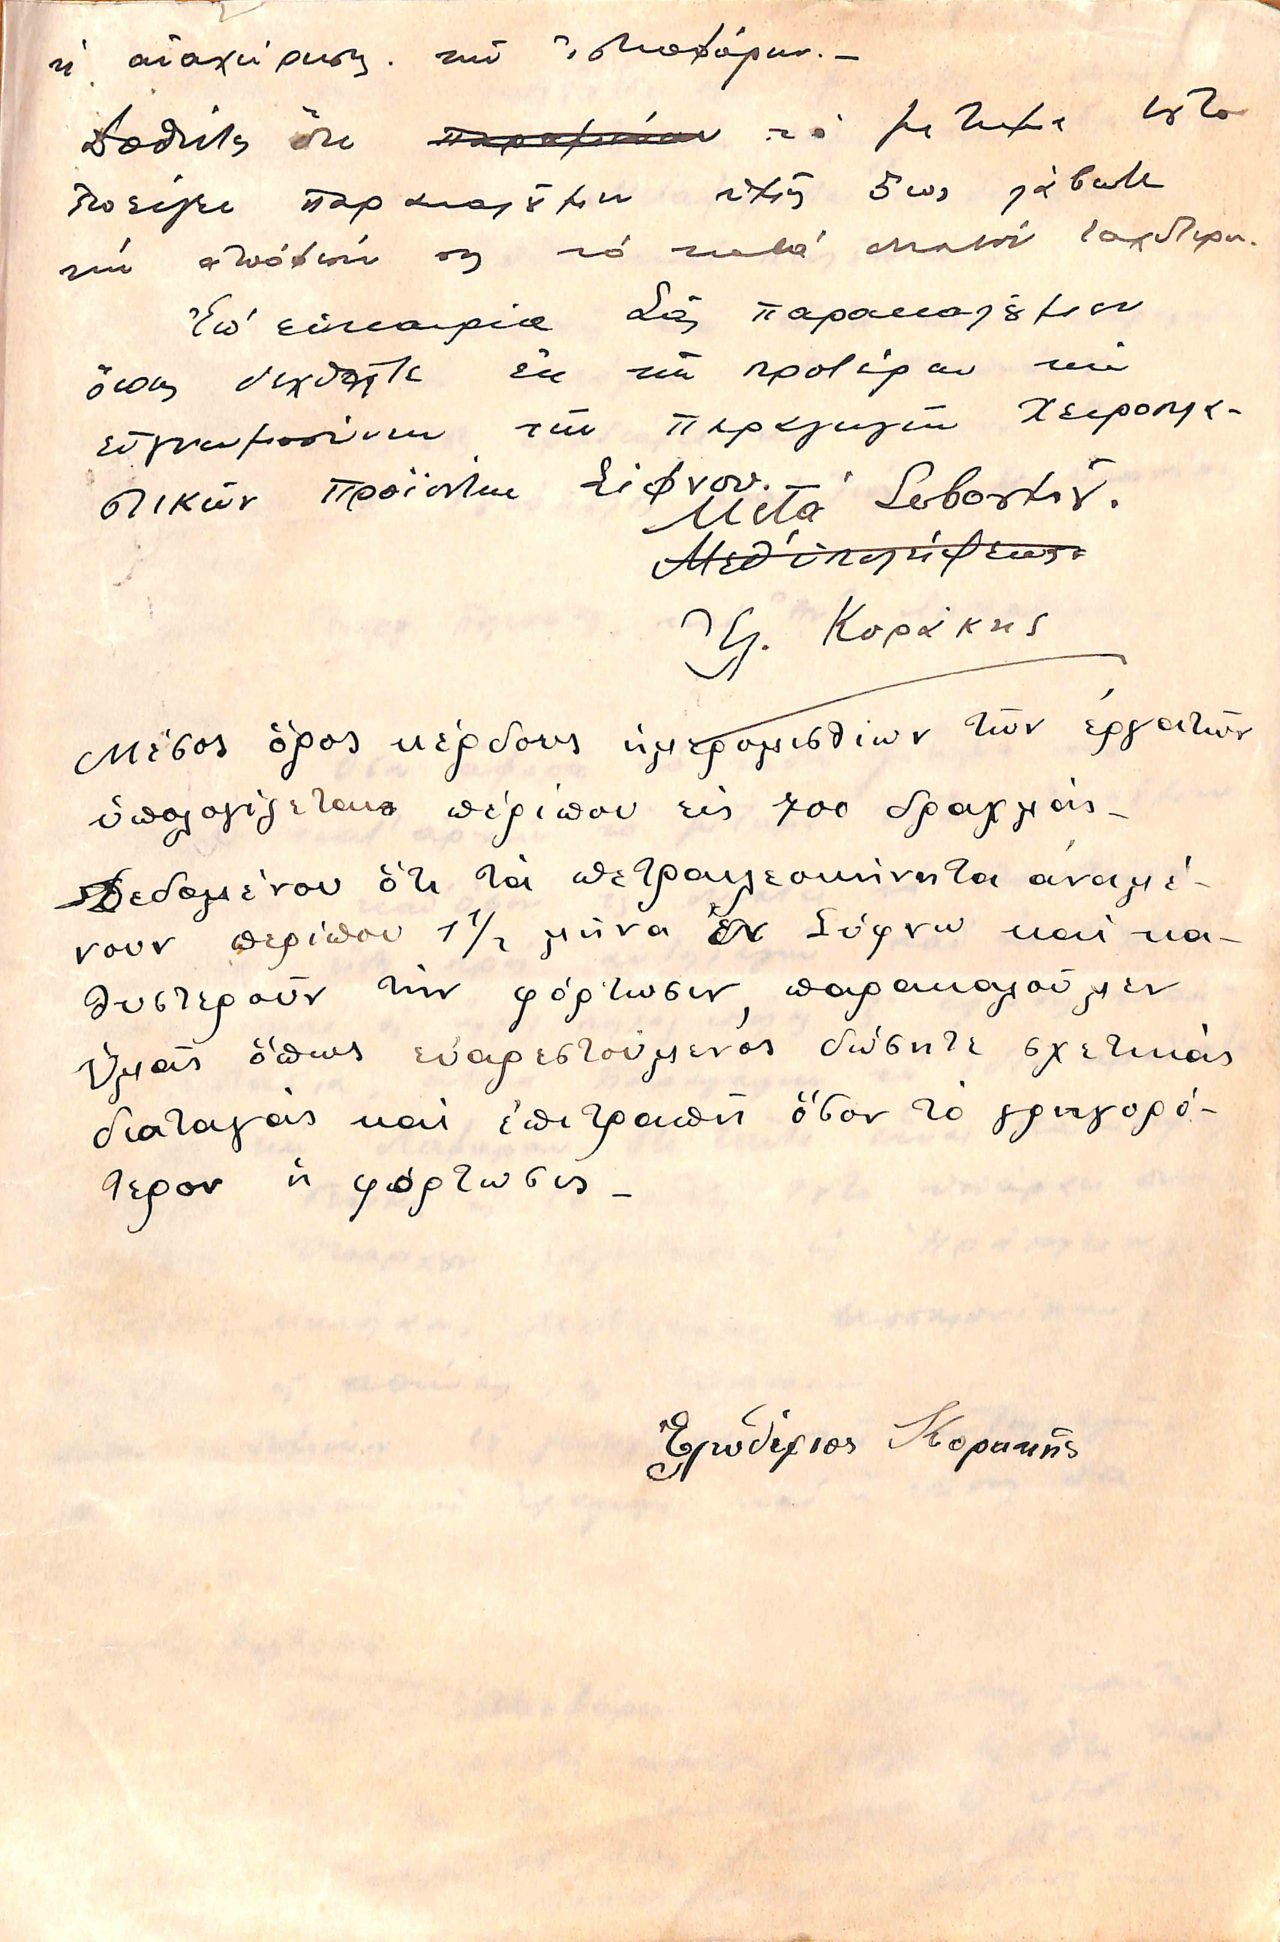 Correspondence between Eleftherios Korakis and the Italian authorities, June 24 1942 (4/4).